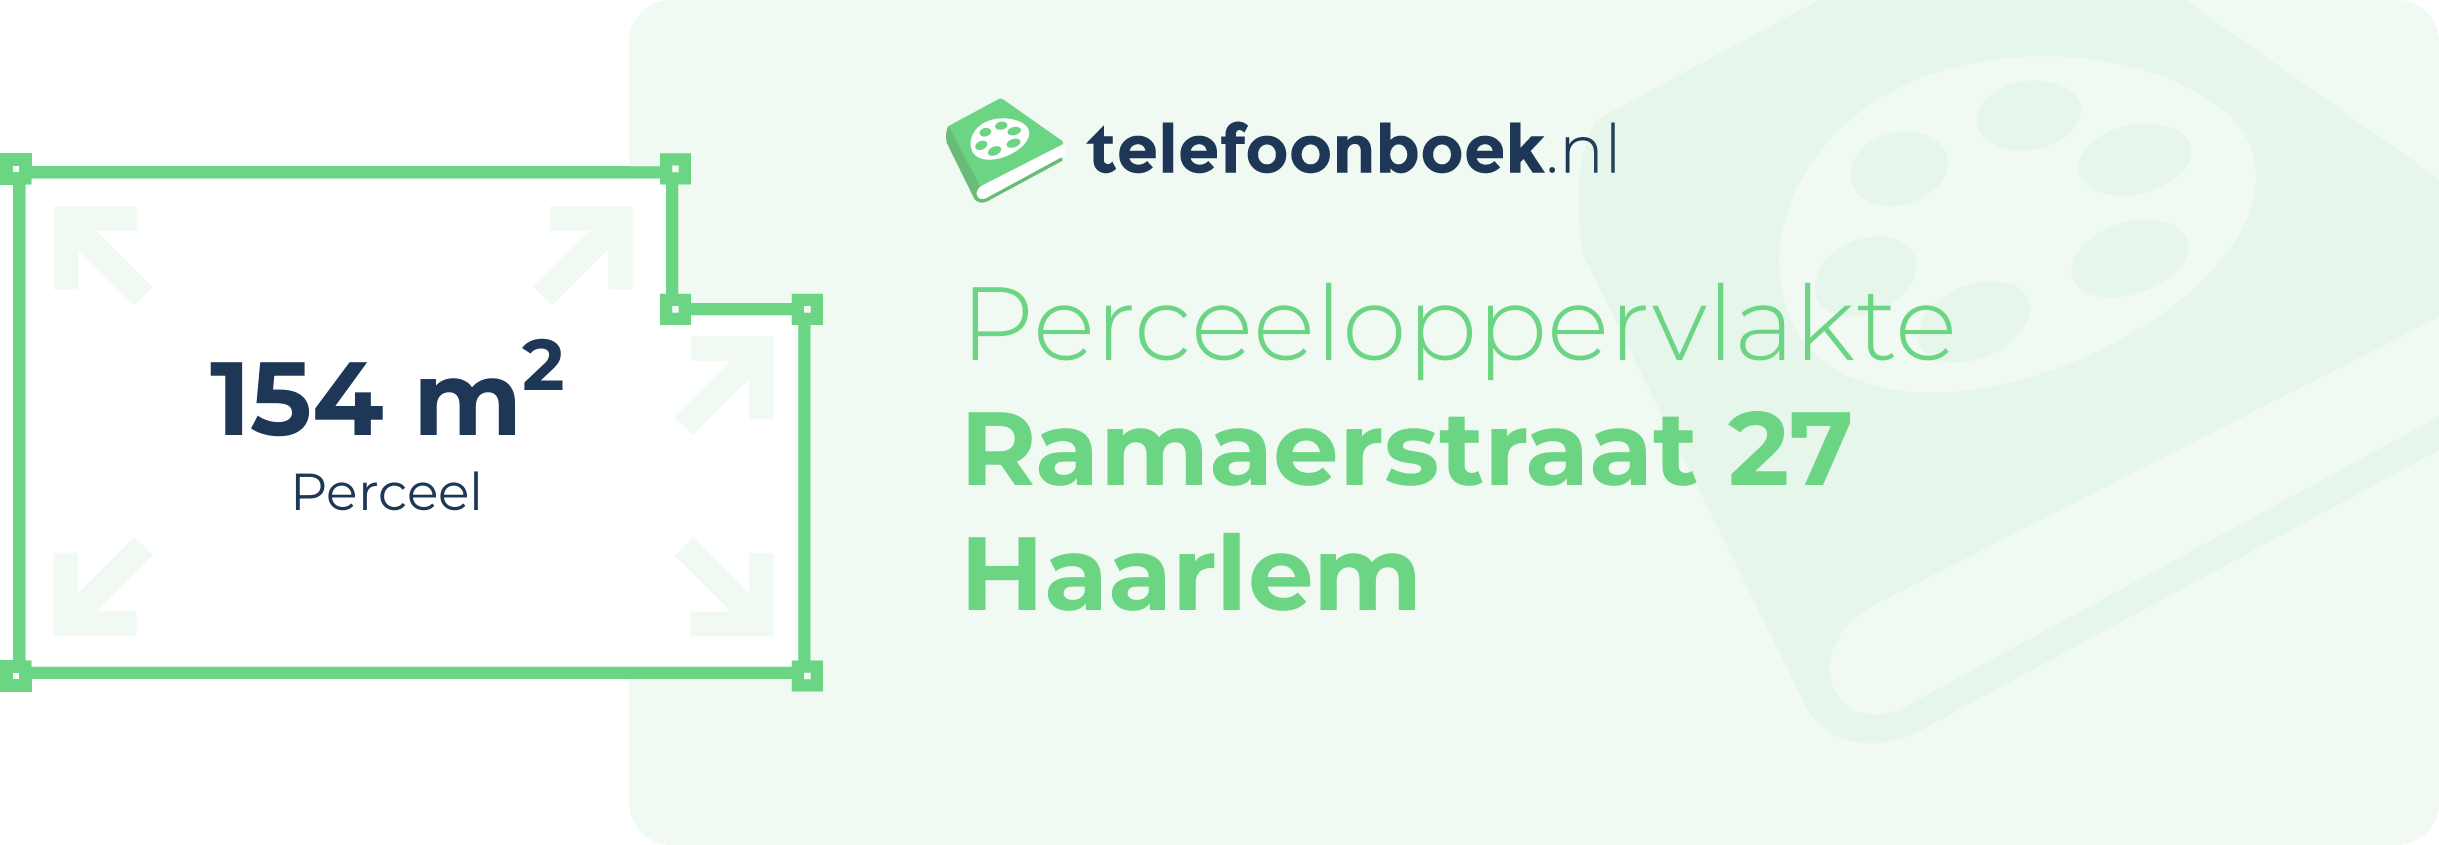 Perceeloppervlakte Ramaerstraat 27 Haarlem